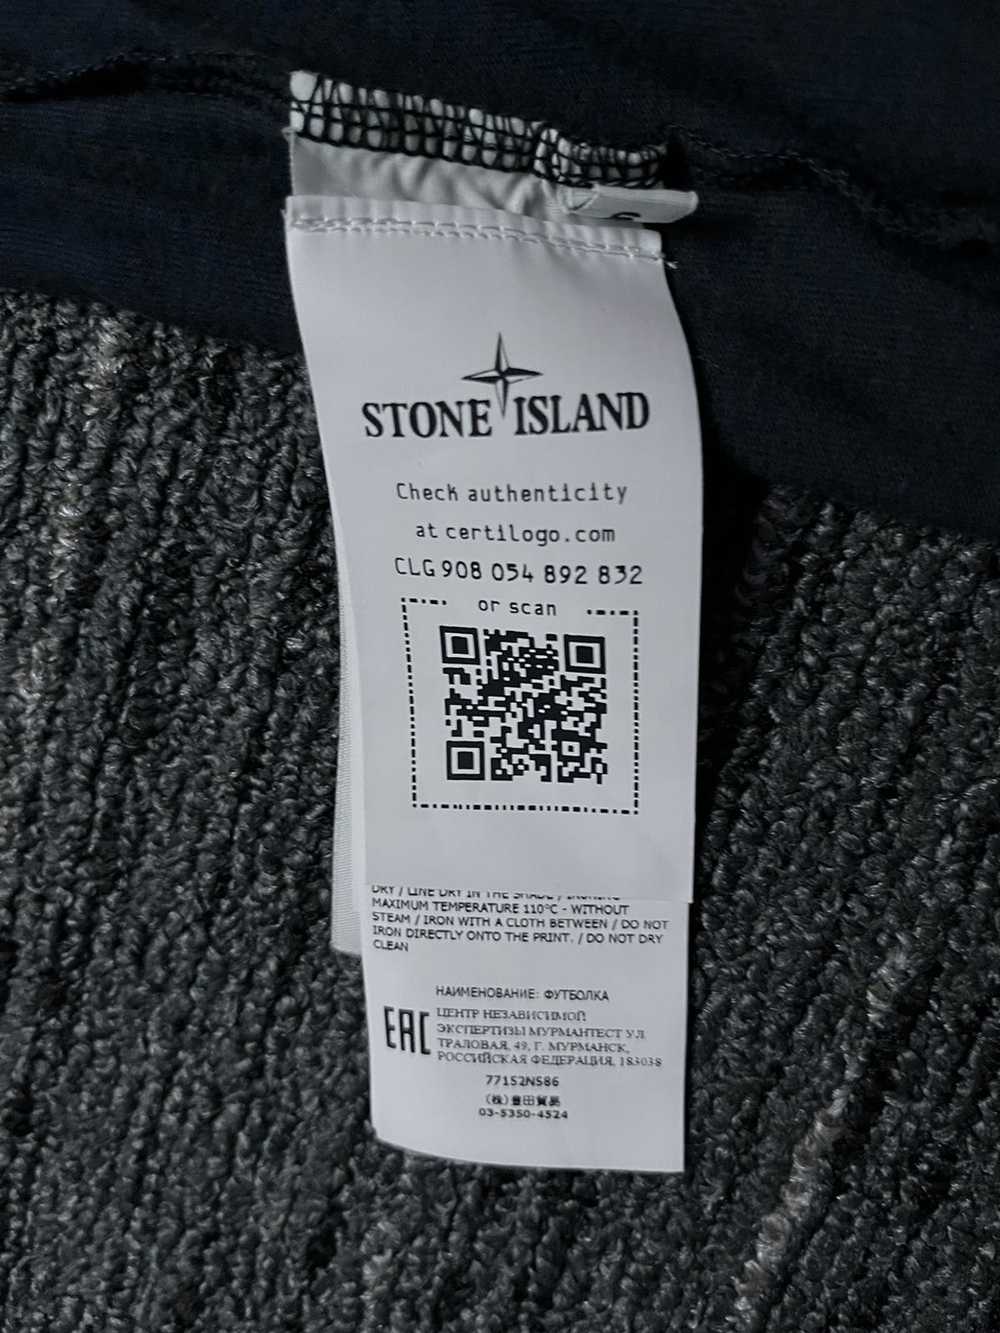 Stone Island Stone Island Tee - image 4